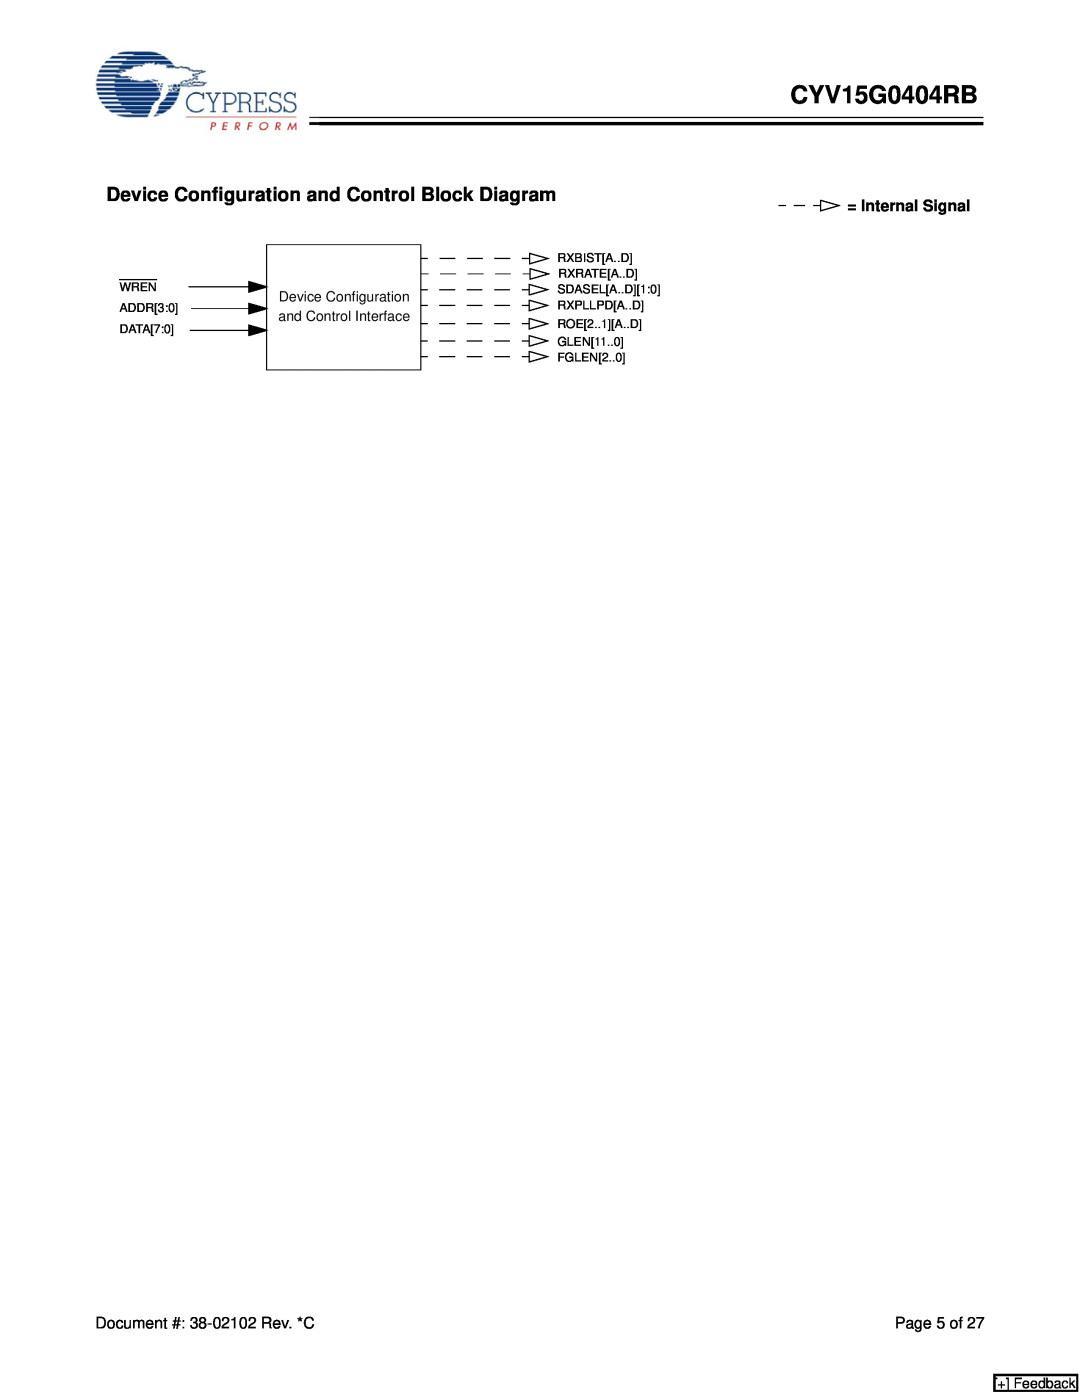 Cypress CYV15G0404RB manual Device Configuration and Control Block Diagram, = Internal Signal, + Feedback 